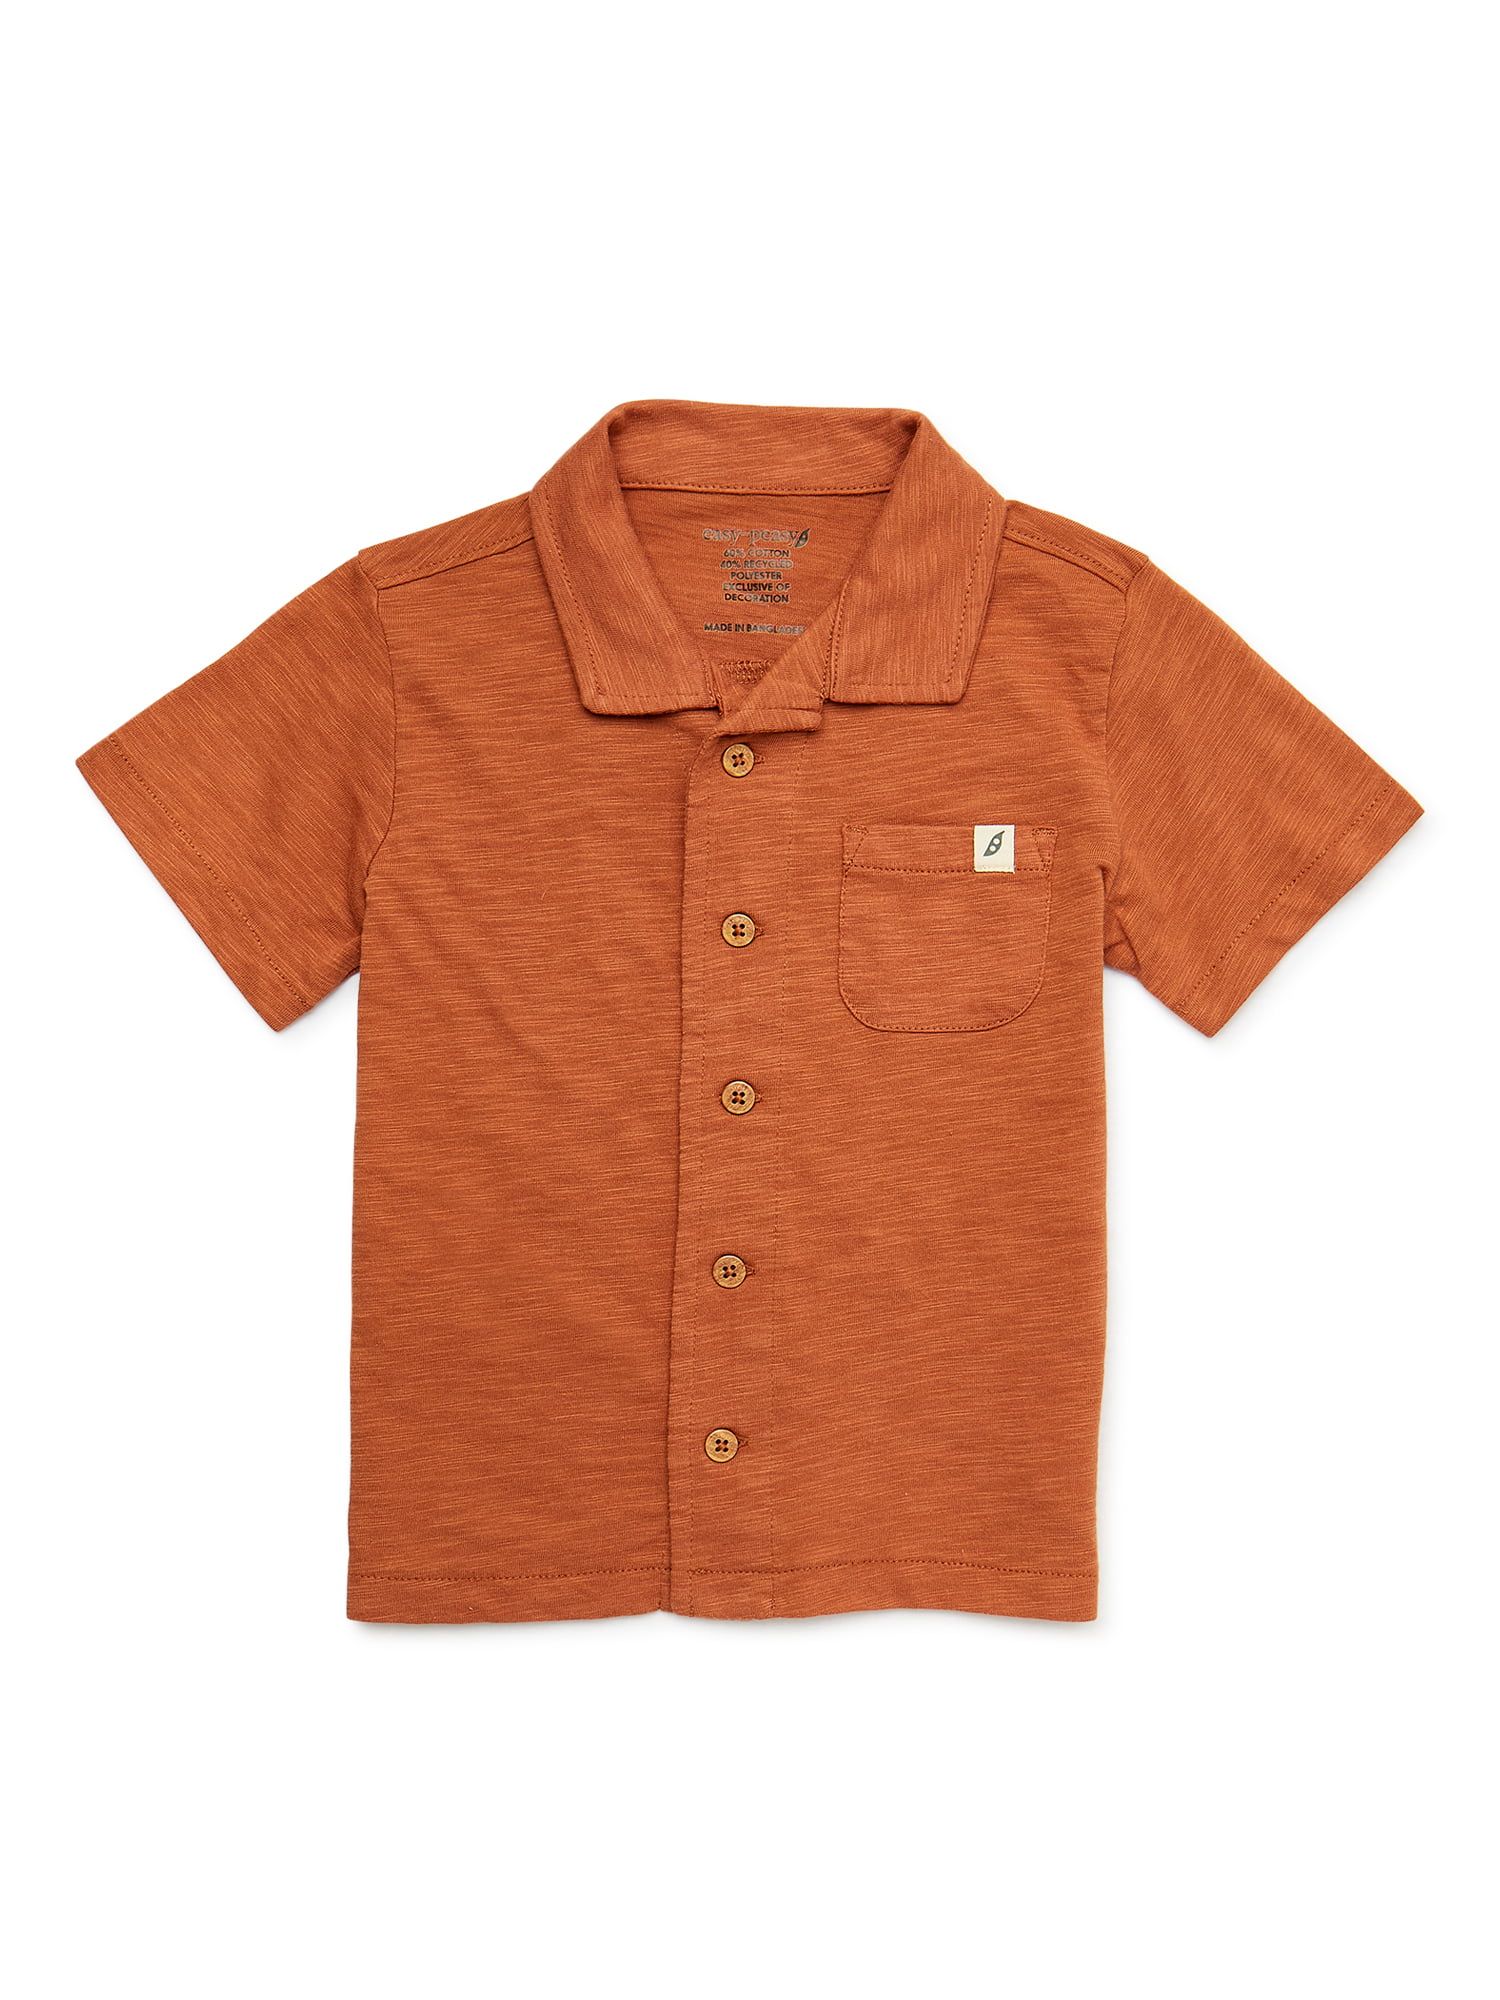 easy-peasy Toddler Boy Short Sleeve Camp Shirt, Sizes 12 Months-5T | Walmart (US)